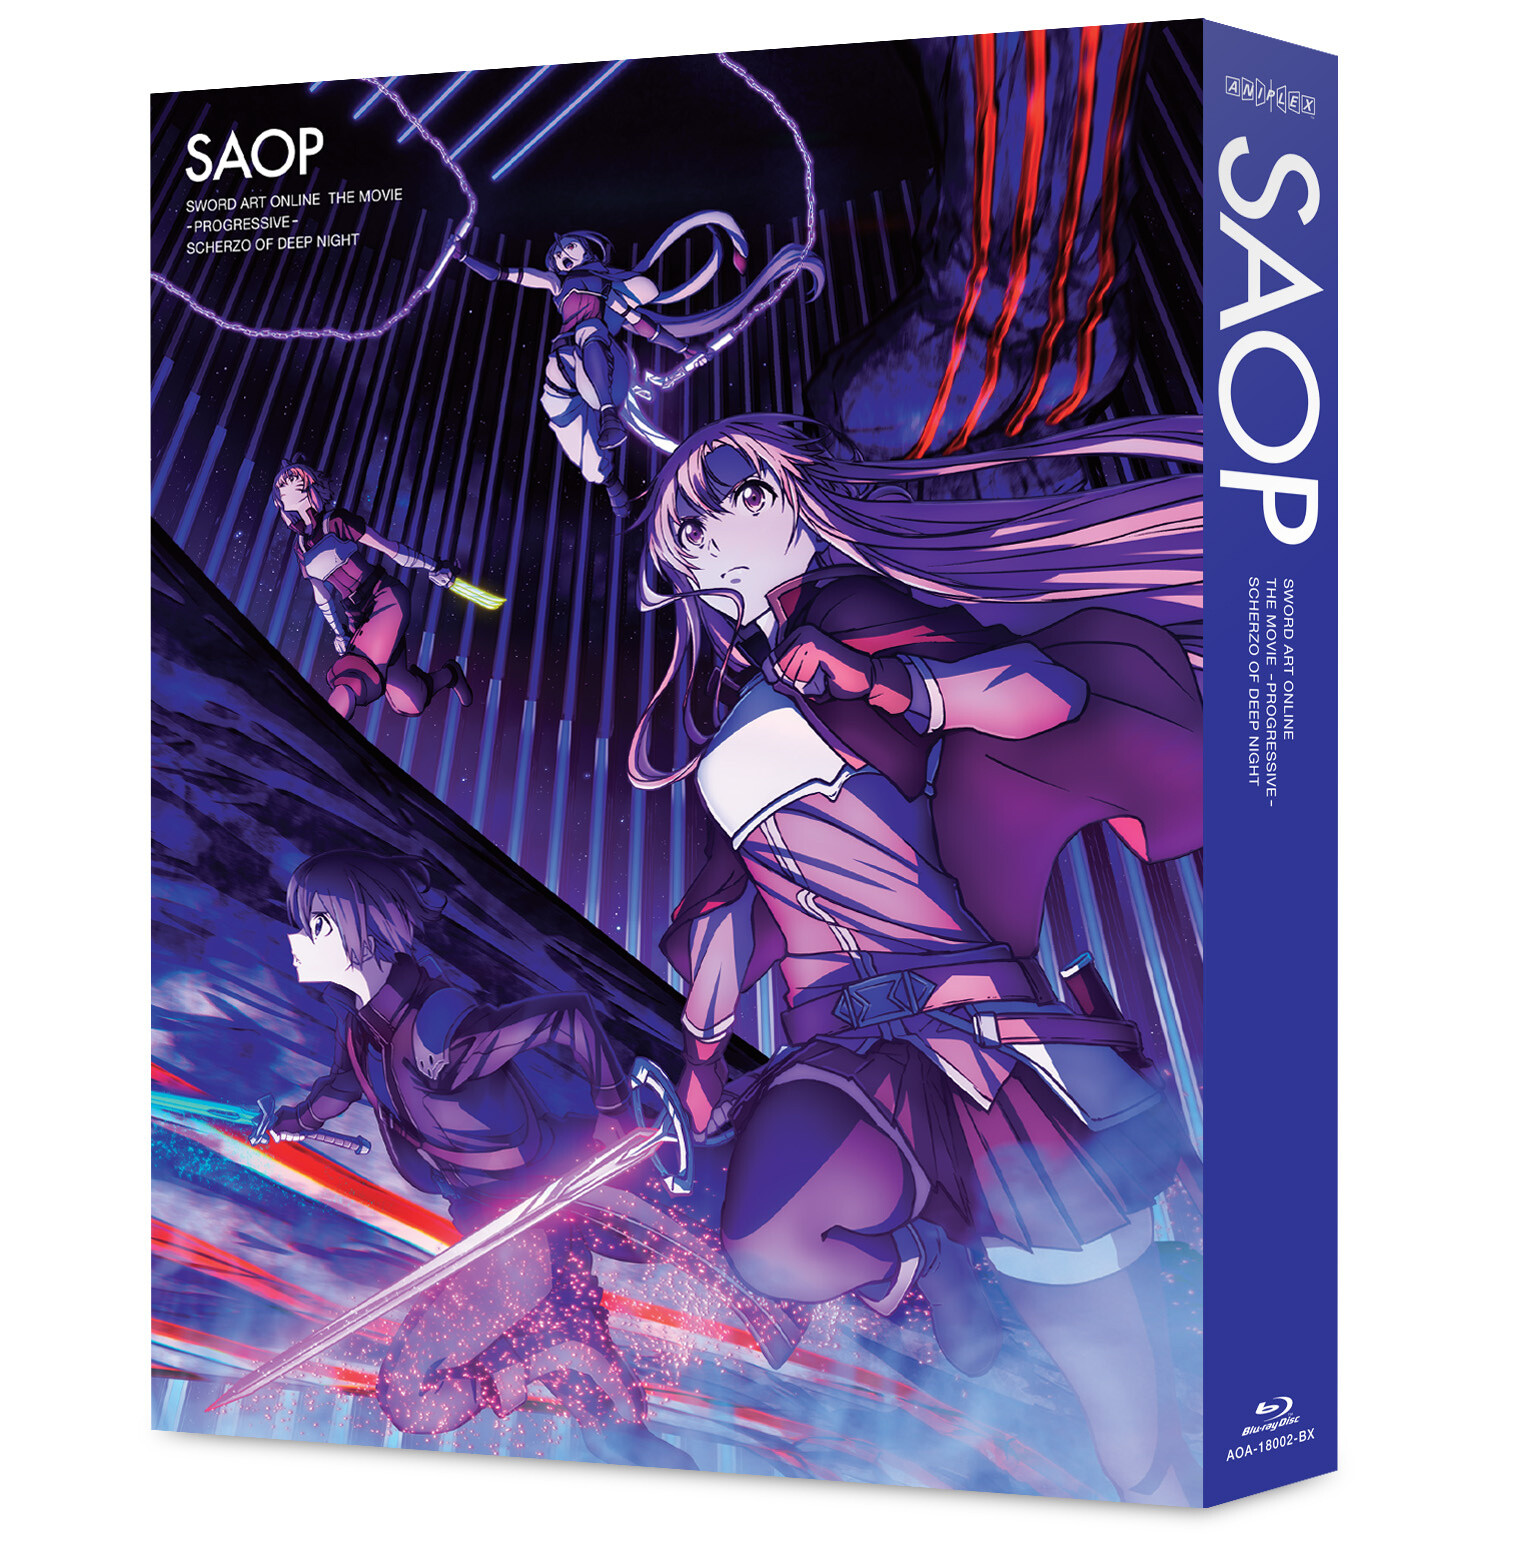 Sword Art Online the Movie -Progressive- Scherzo of Deep Night Limited  Edition Blu-ray